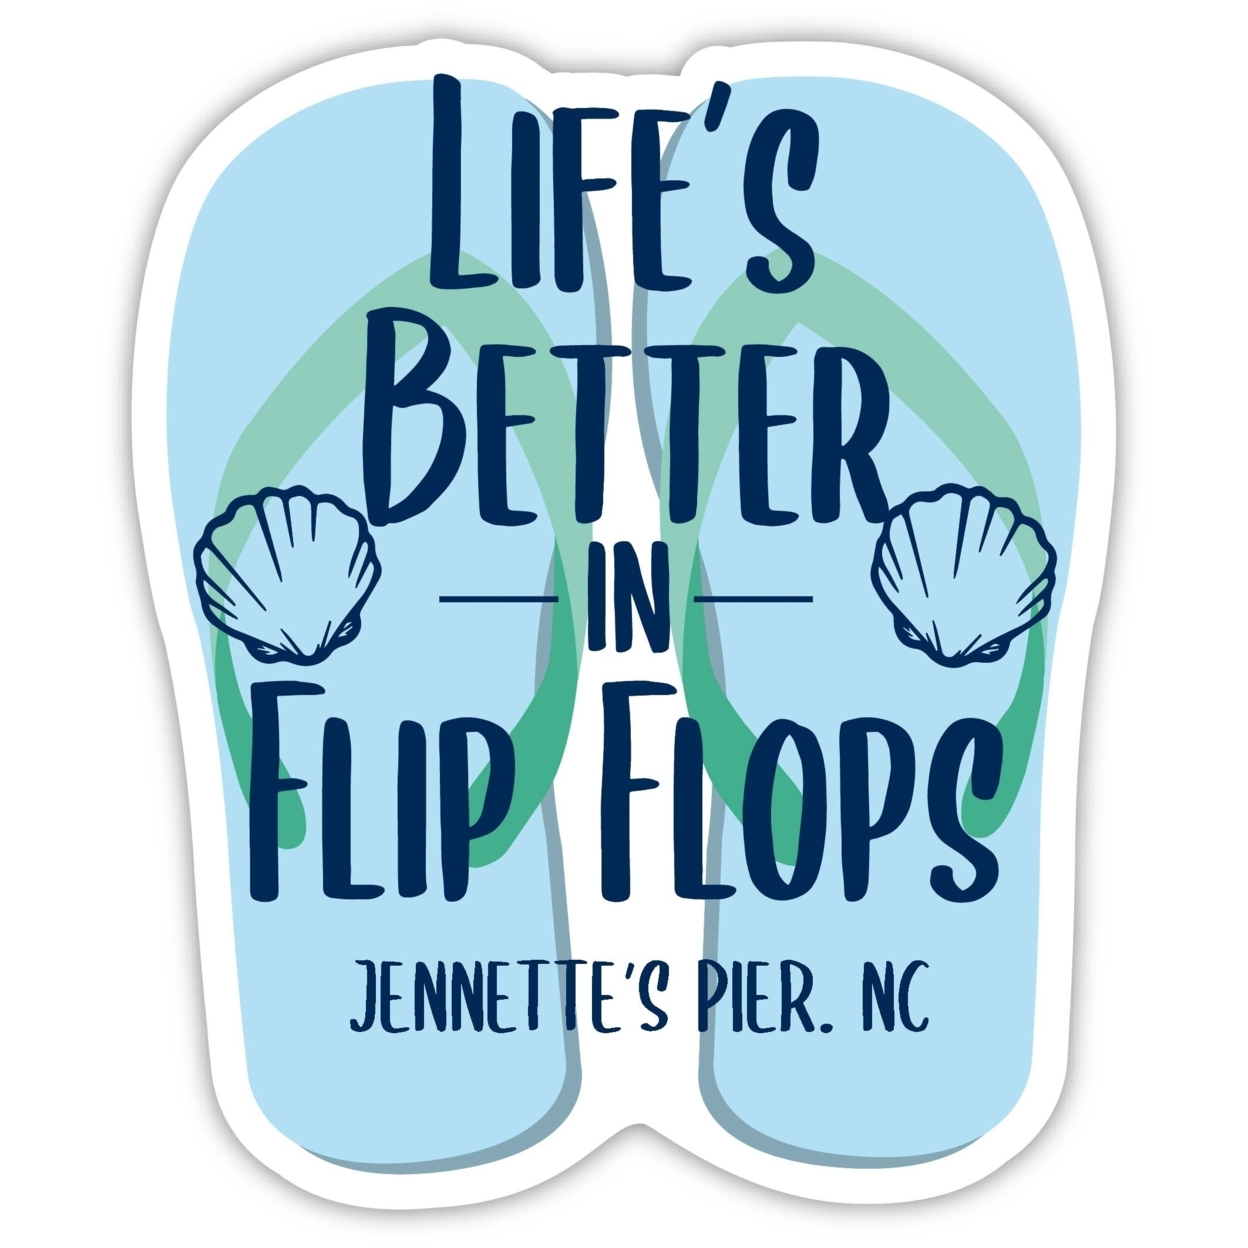 Jennette'S Pier North Carolina Souvenir 4 Inch Vinyl Decal Sticker Flip Flop Design